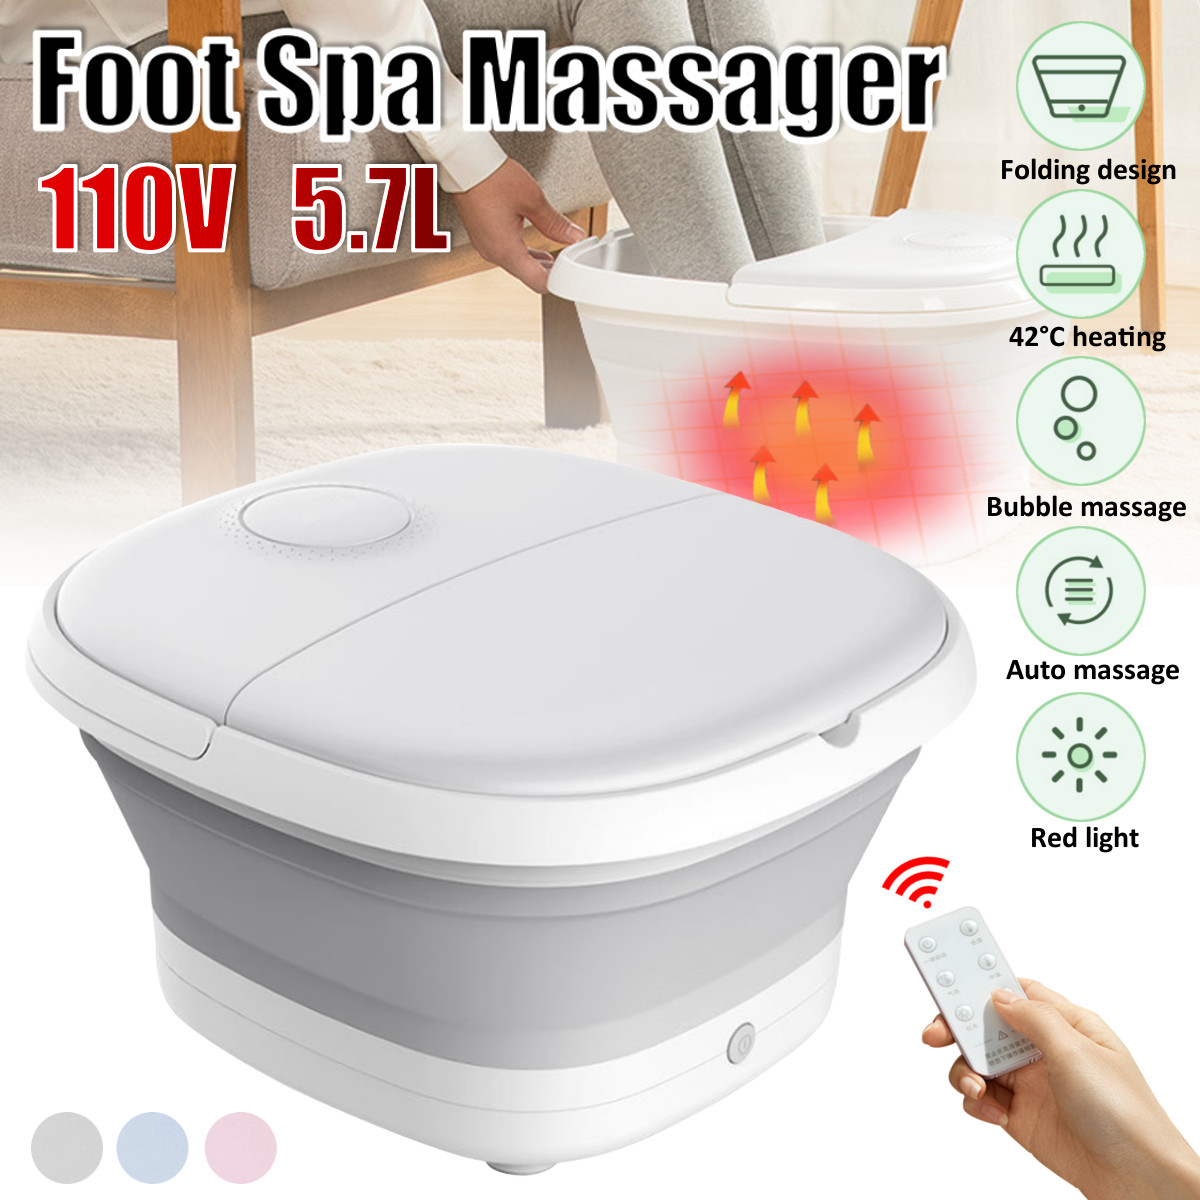 110V-Foldable-Foot-Spa-Bath-Massager-Red-Light-Motorized-Electric-Feet-Tub-Shower-57L-1777297-1